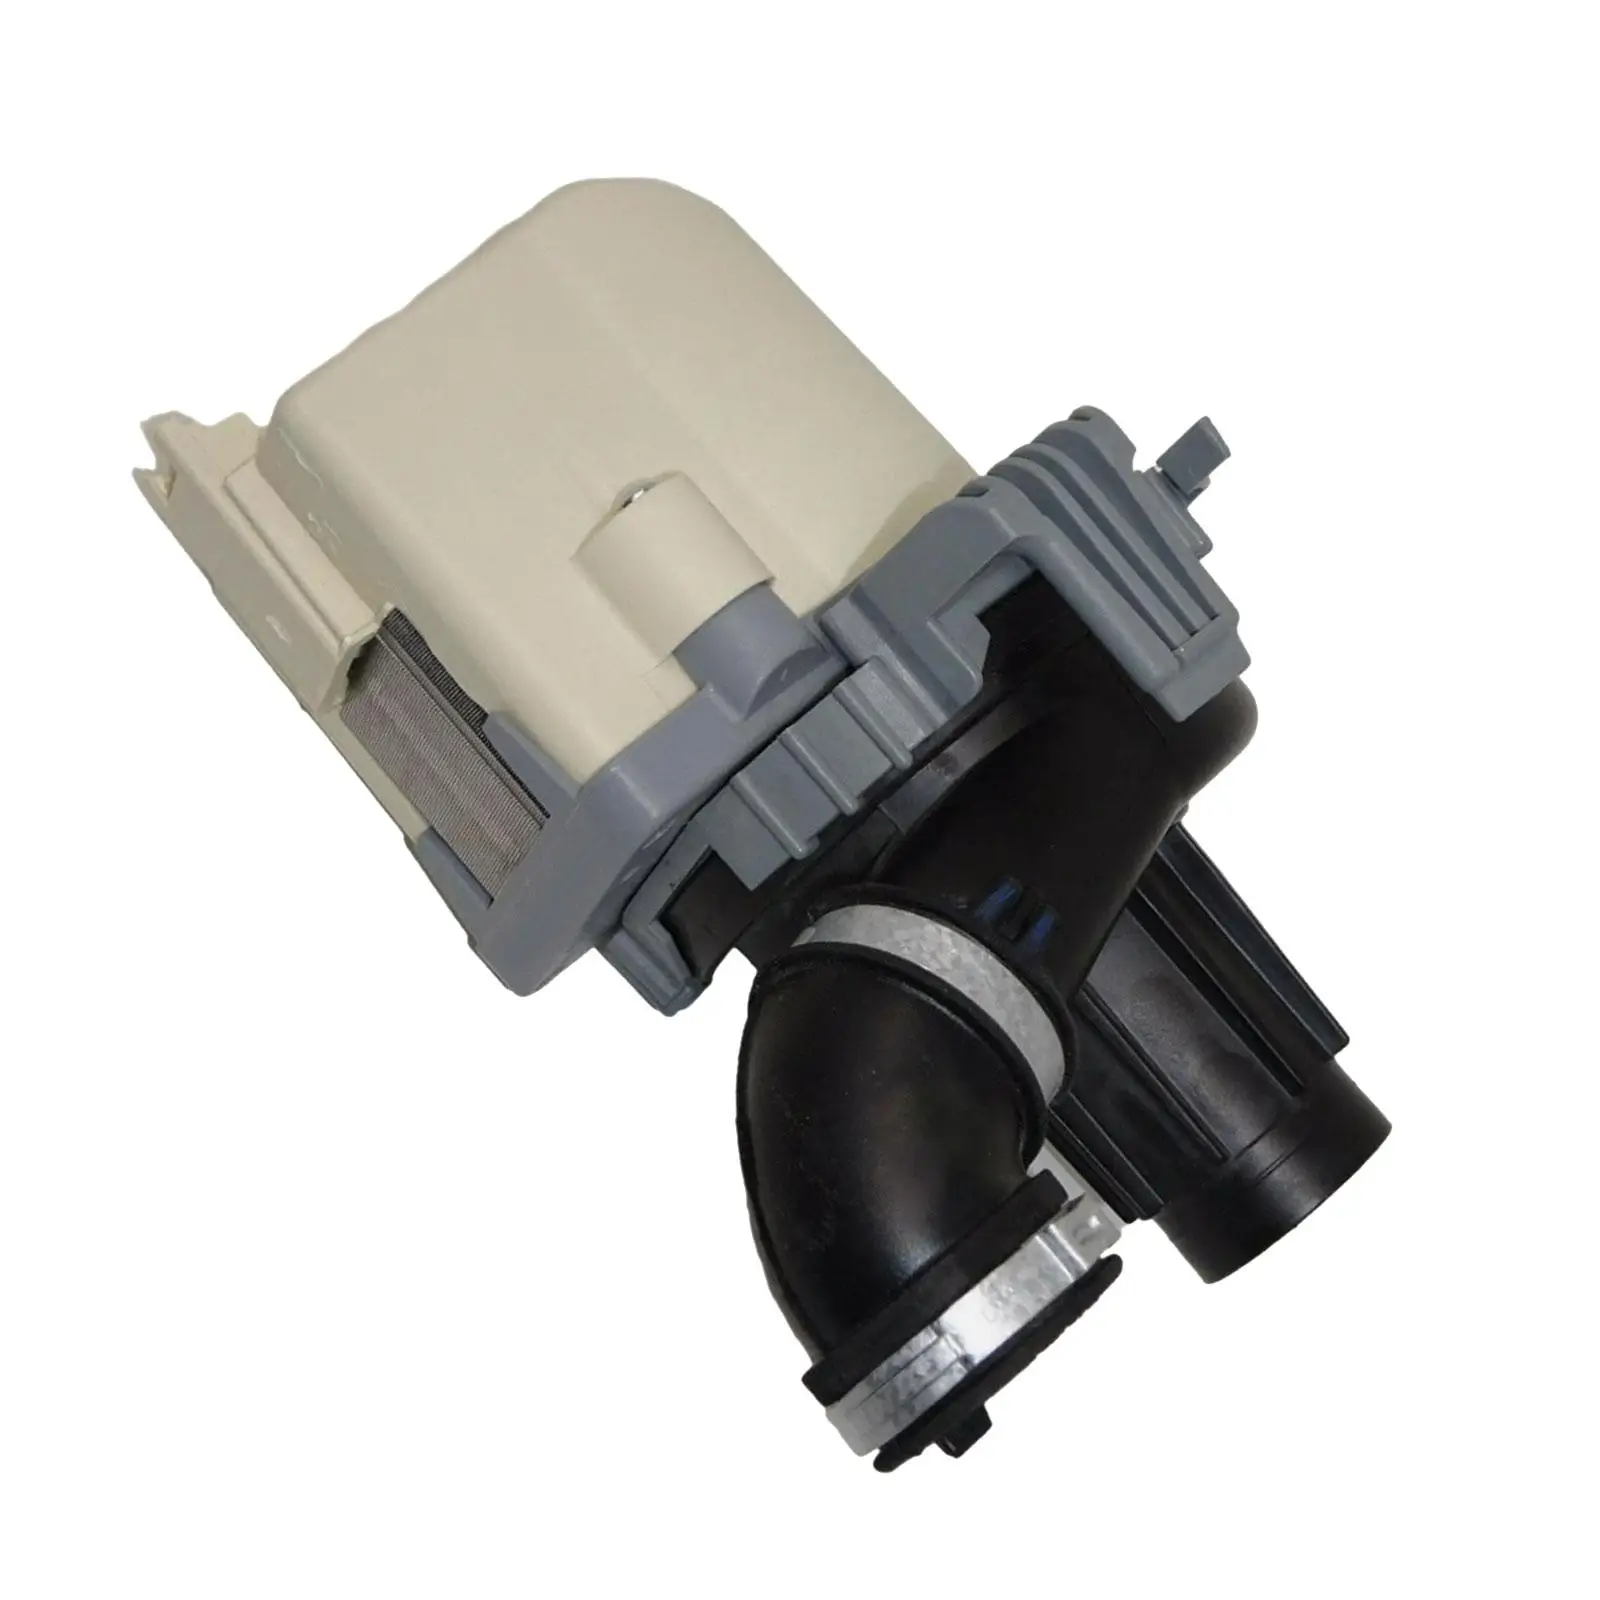 Dishwashers Pump Motor Assembly Washing Machine Drain Pump Heat Pump for W10816492 W10885542 Wpw10529163 W10529163 Accessory